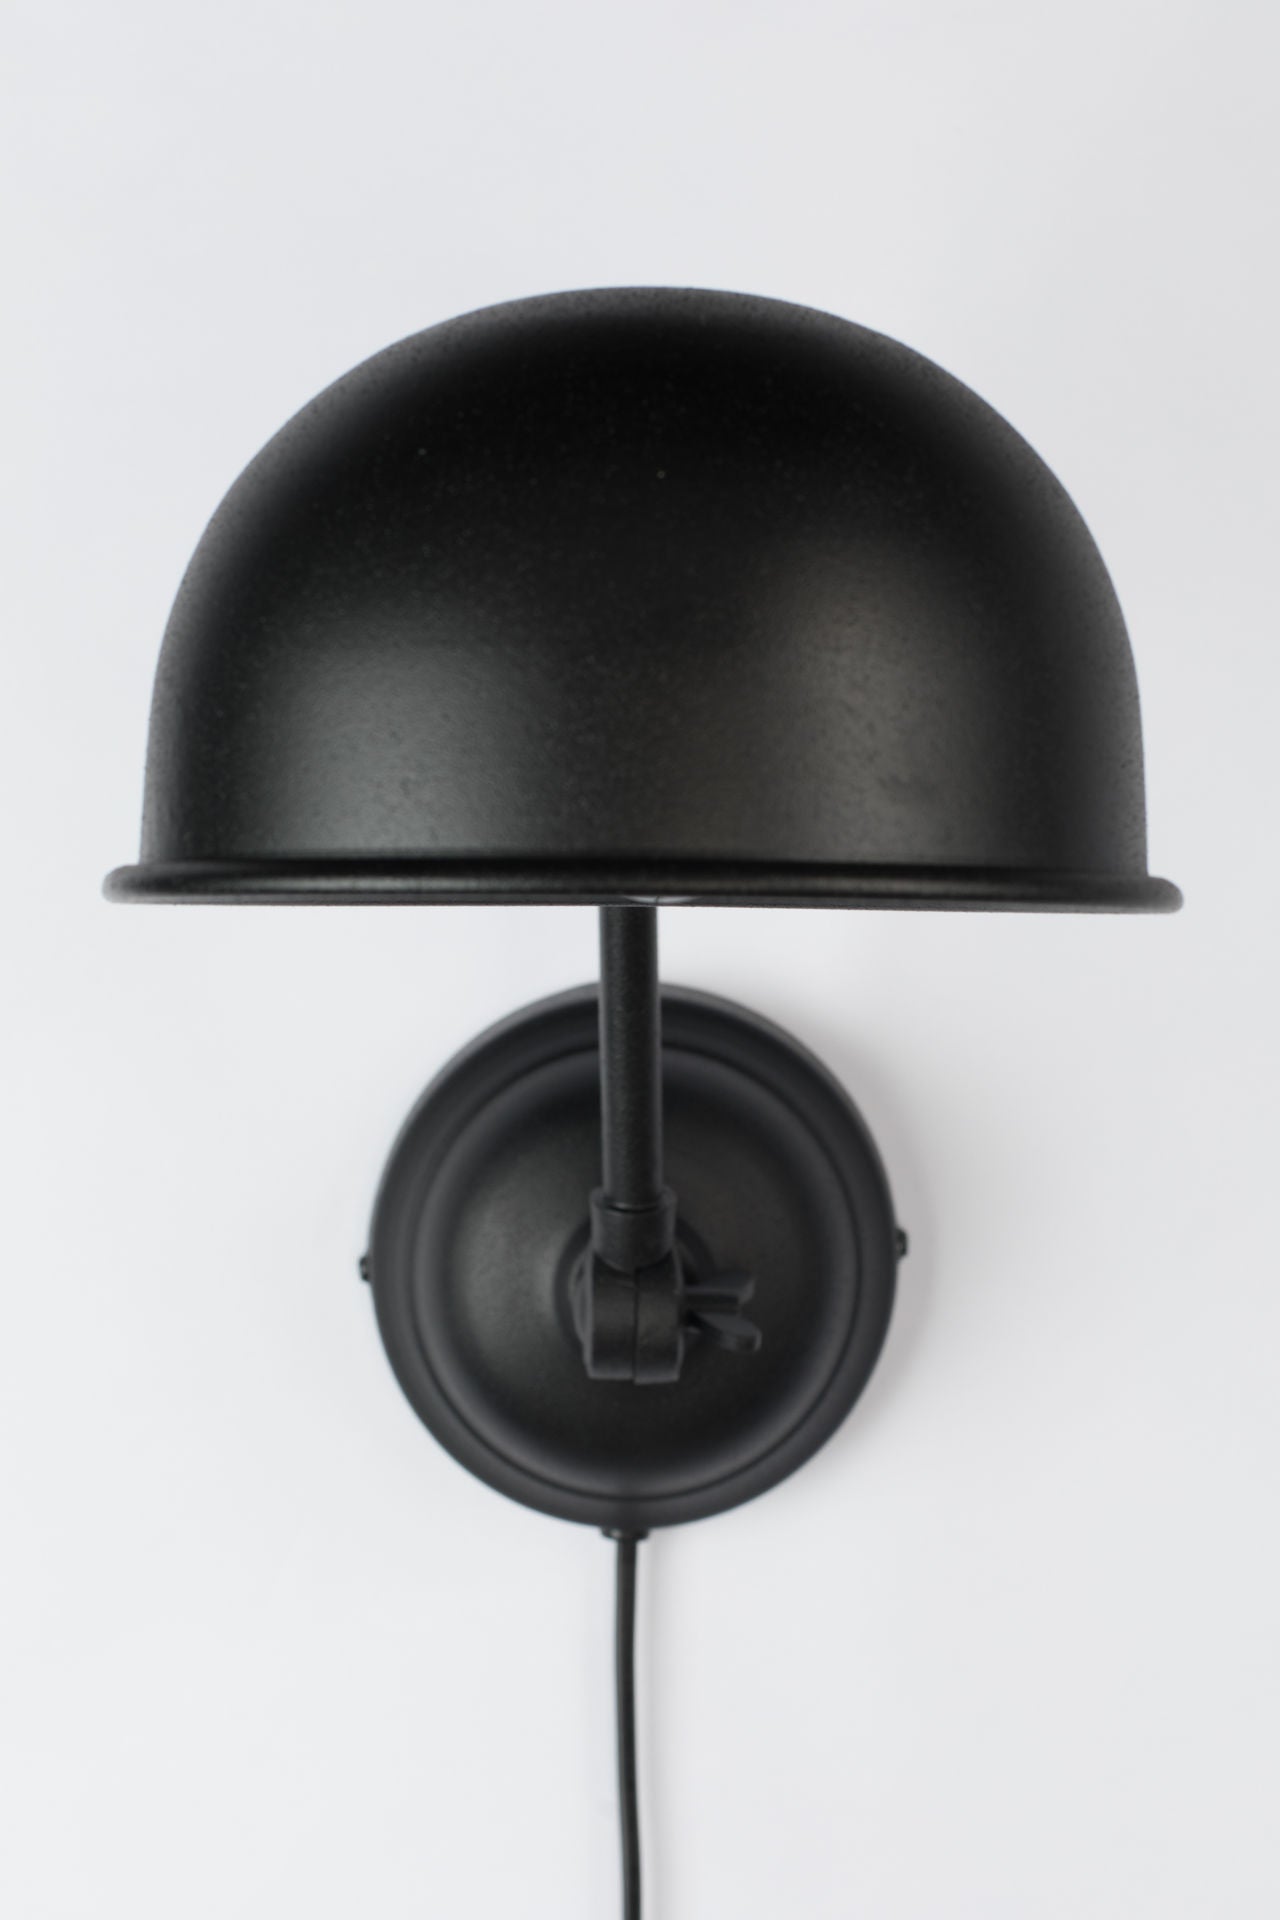 Nancy's Essex Junction Wall Lamp - Modern - Black - Iron, Brass, PVC - 64 cm x 15 cm x 18 cm